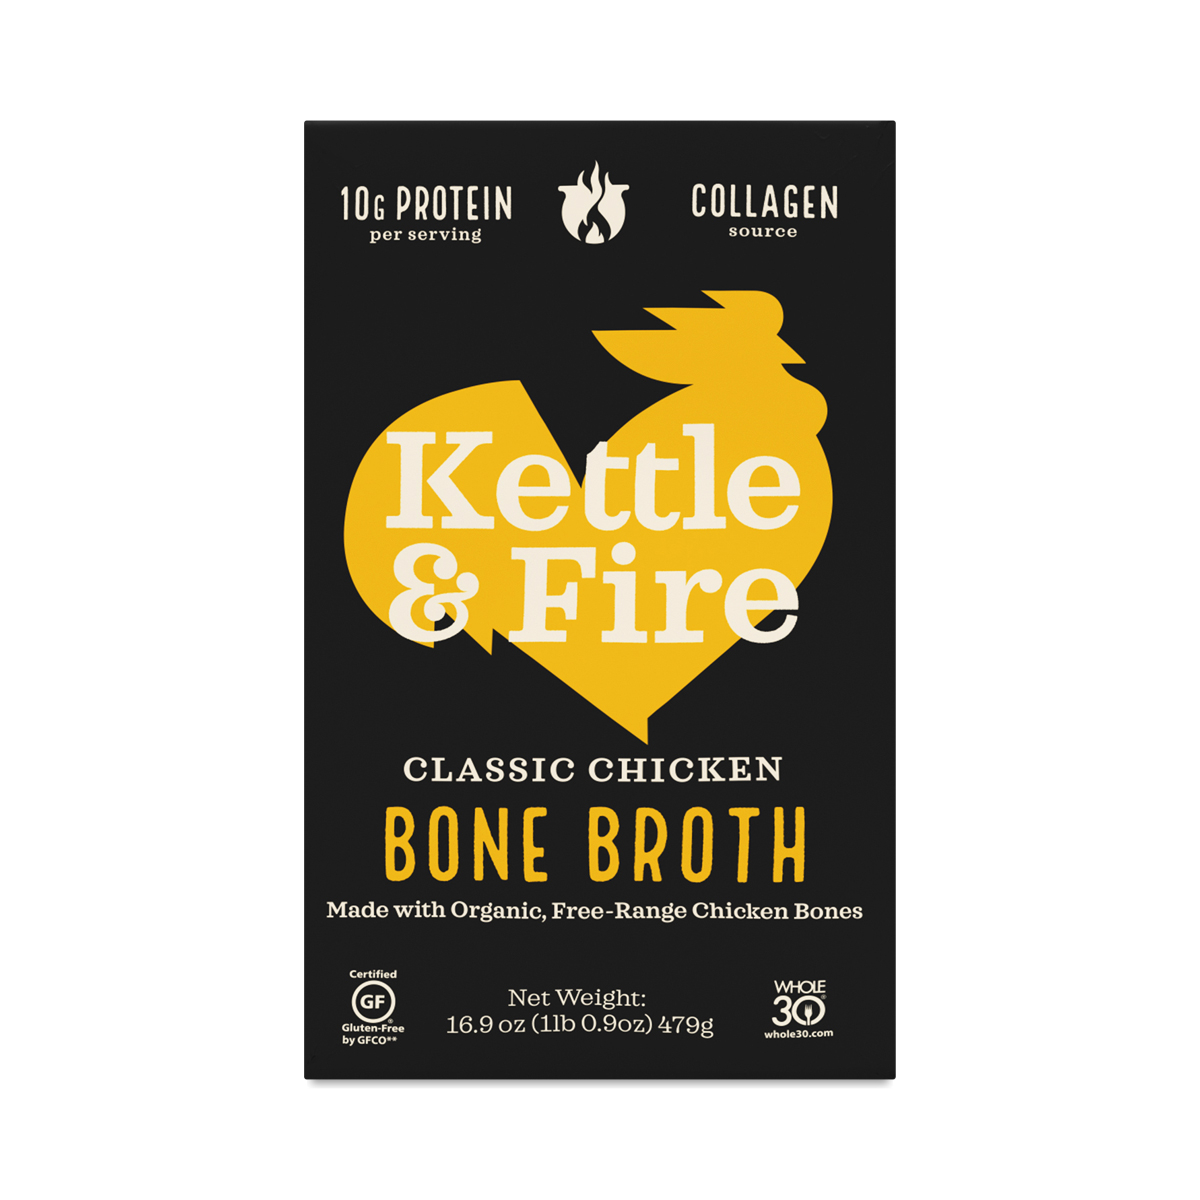 Kettle & Fire Classic Chicken Bone Broth 16.9 oz carton